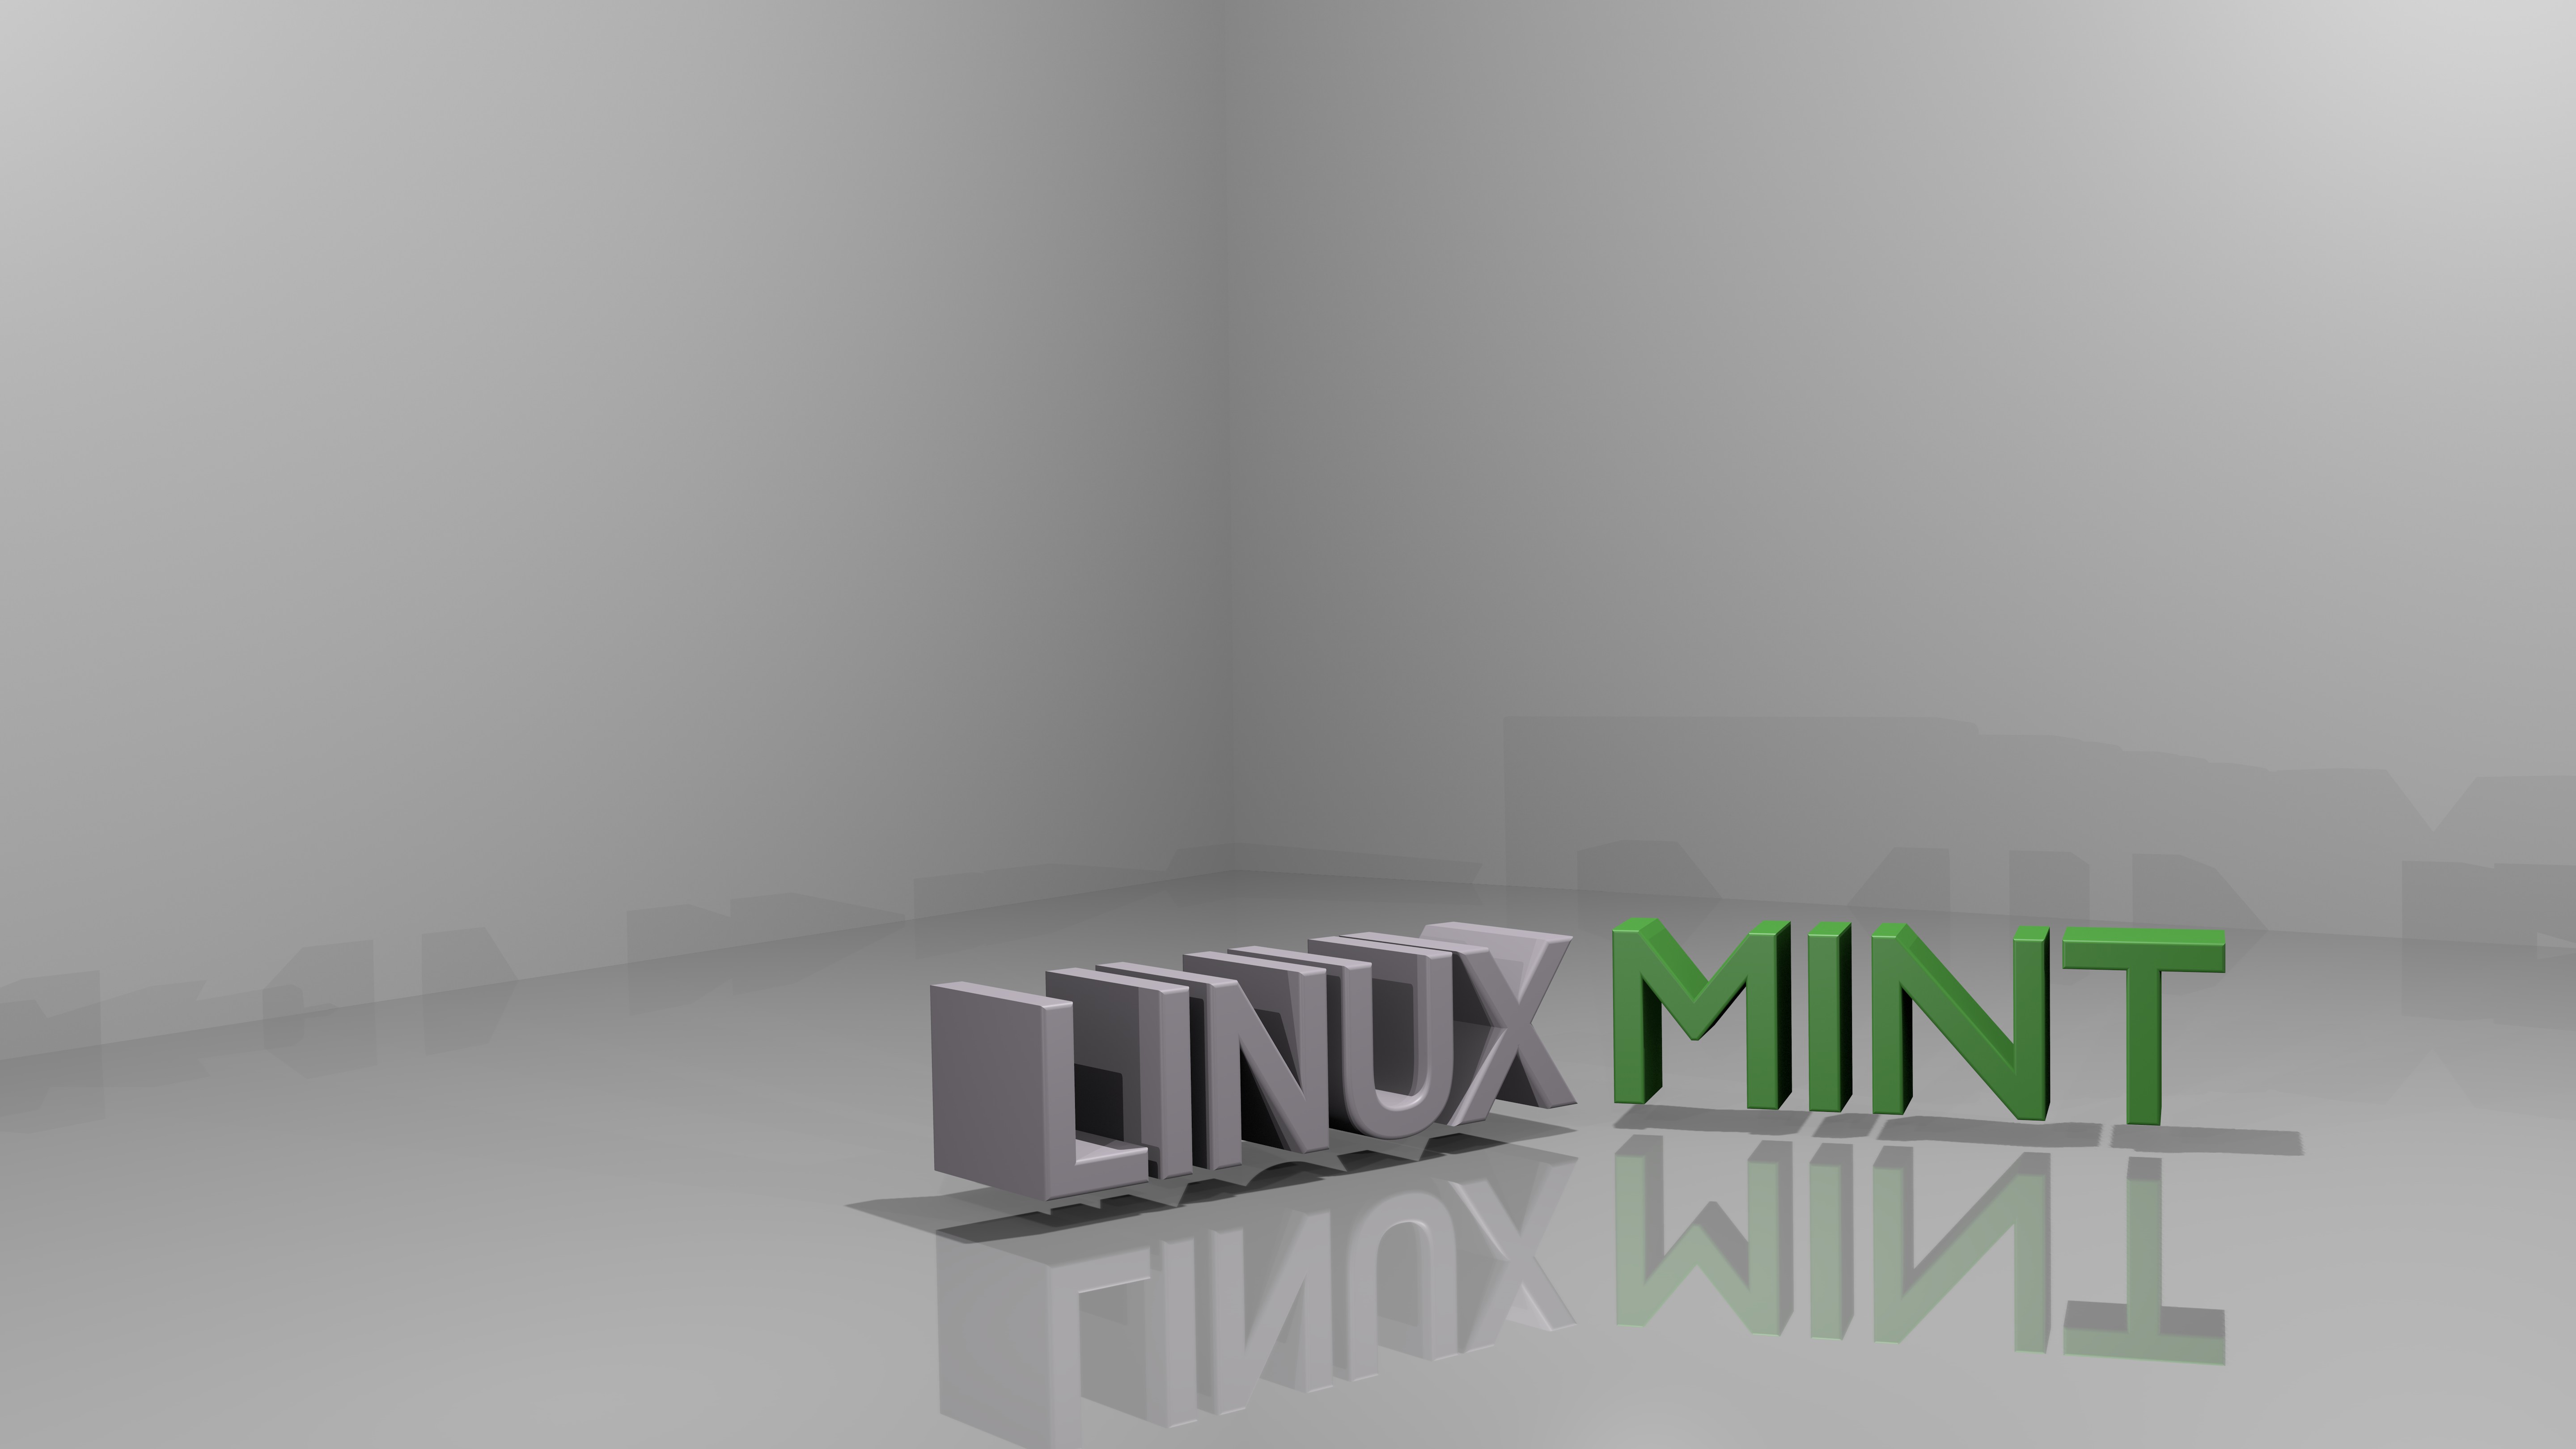 linux mint kid3 gui